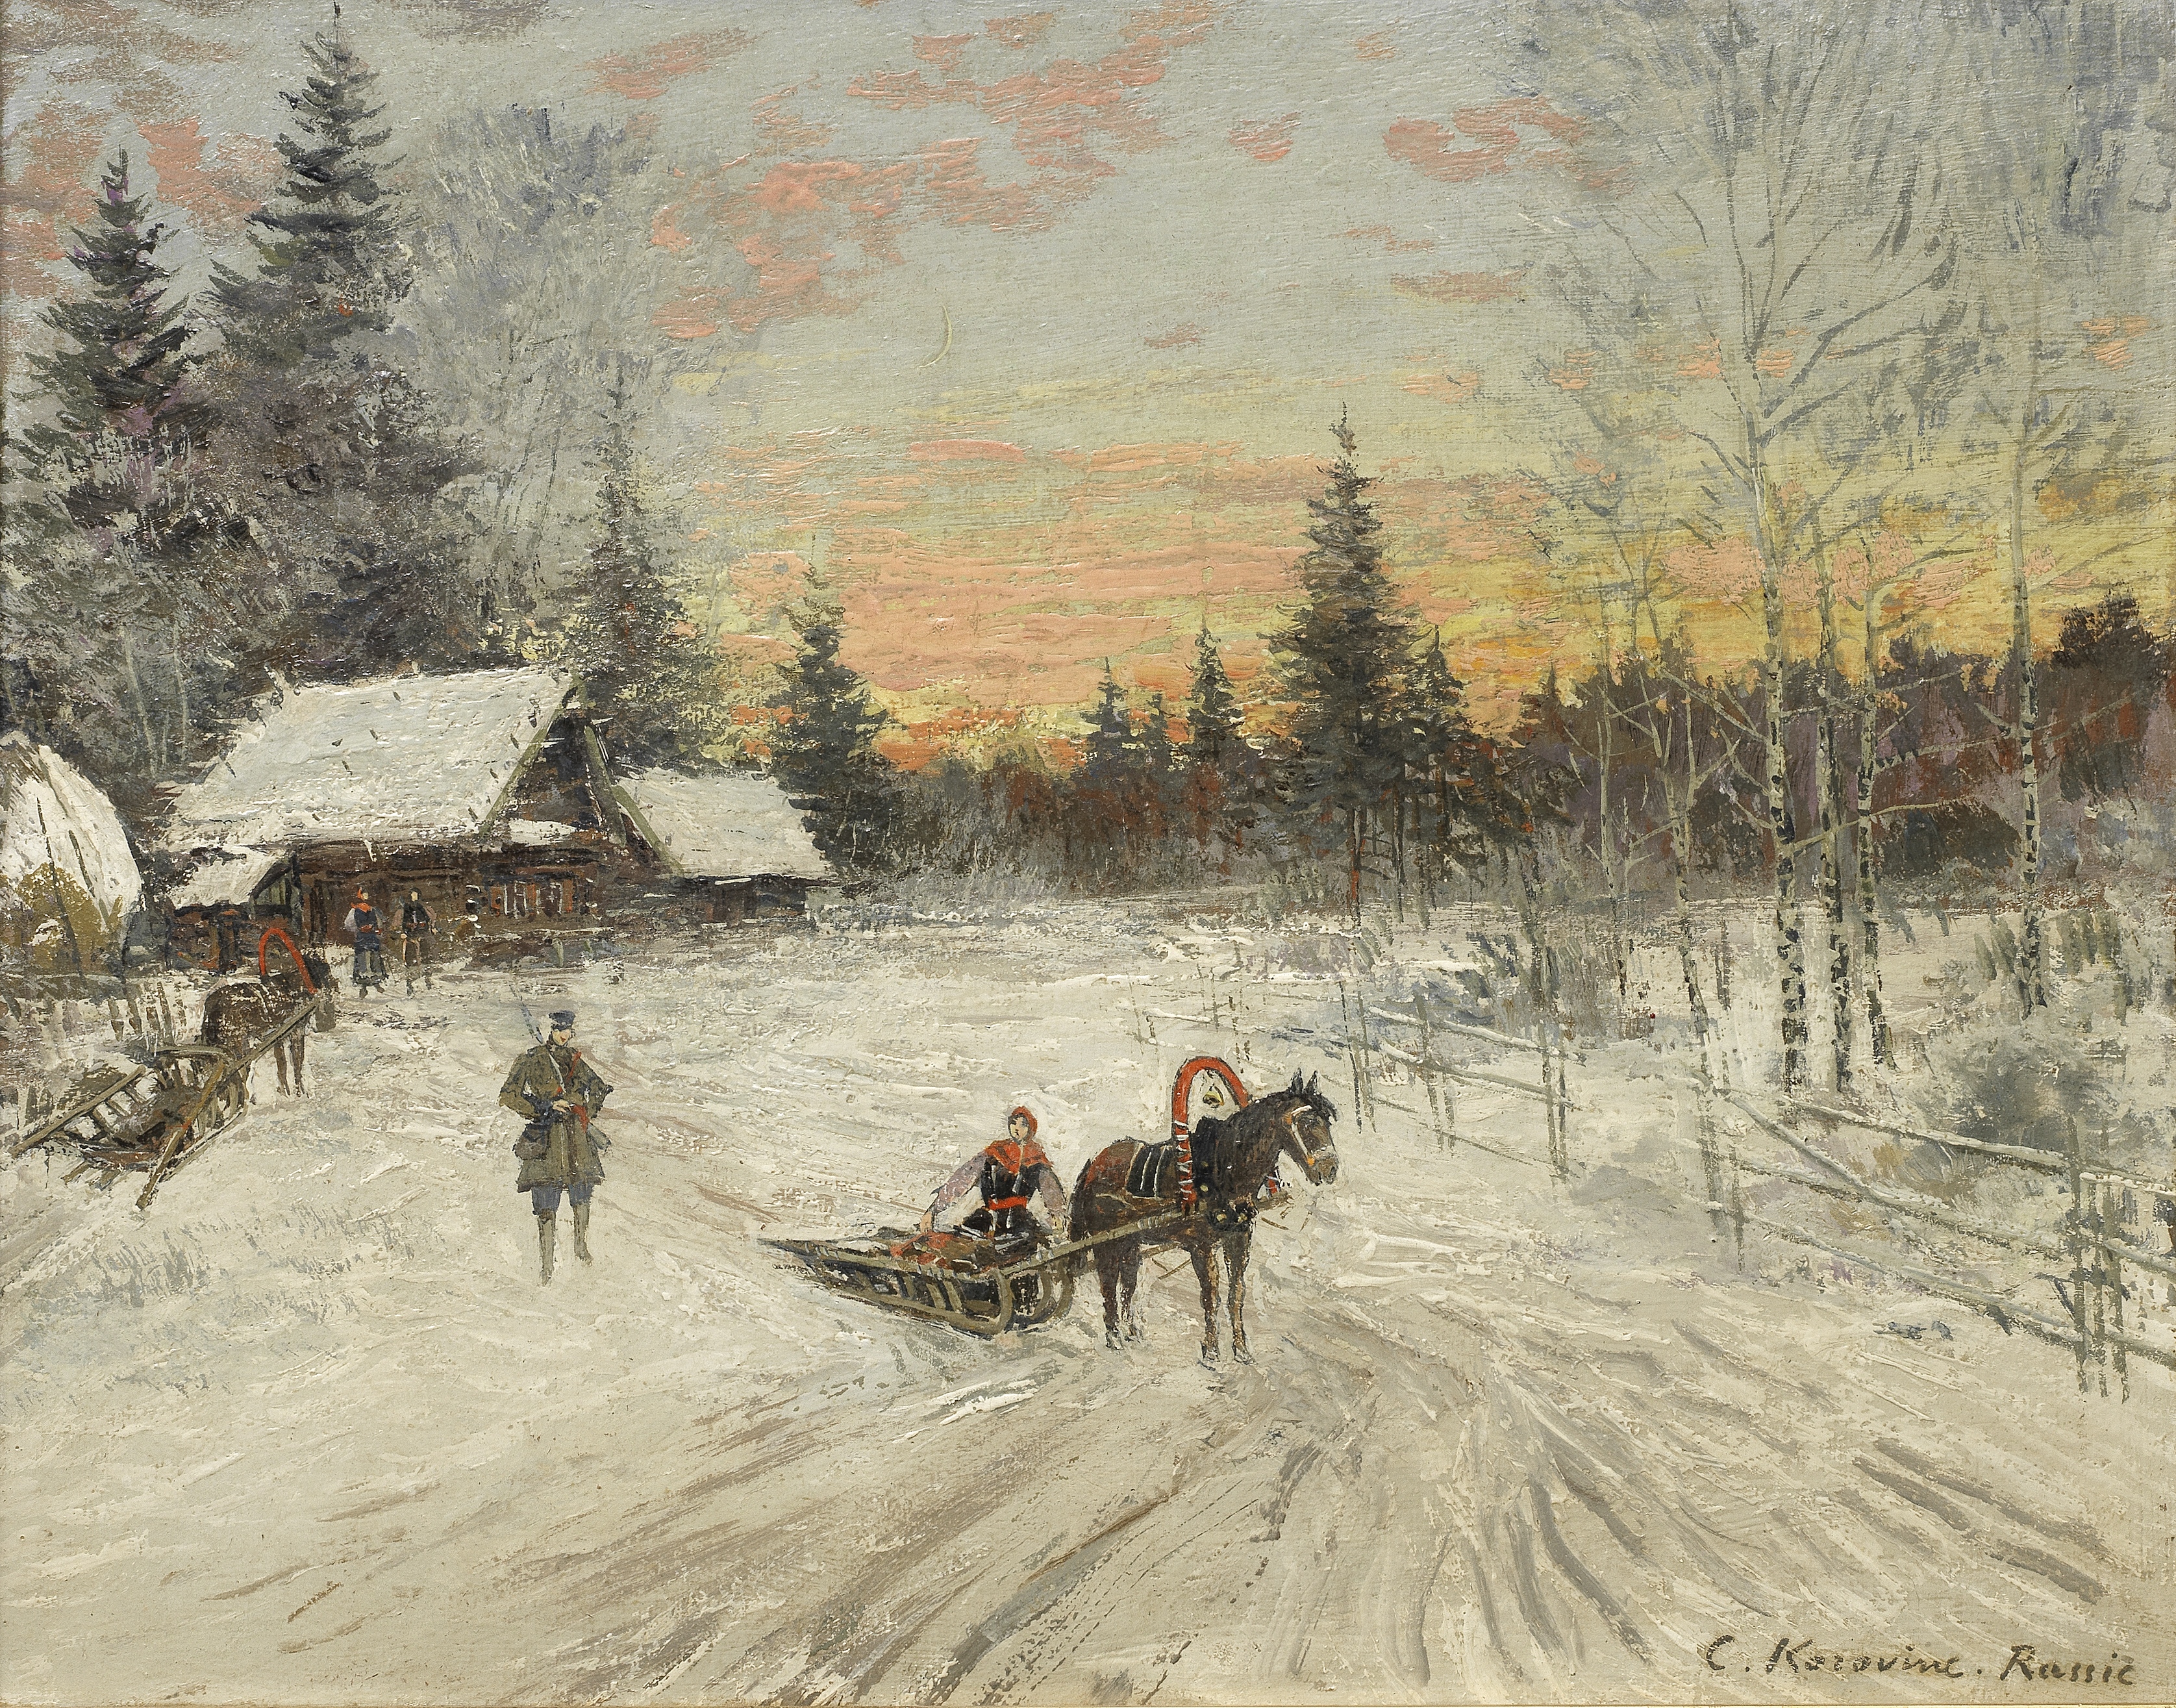 Konstantin Alexeevich Korovin (Russian, 1861-1939) A winter's day